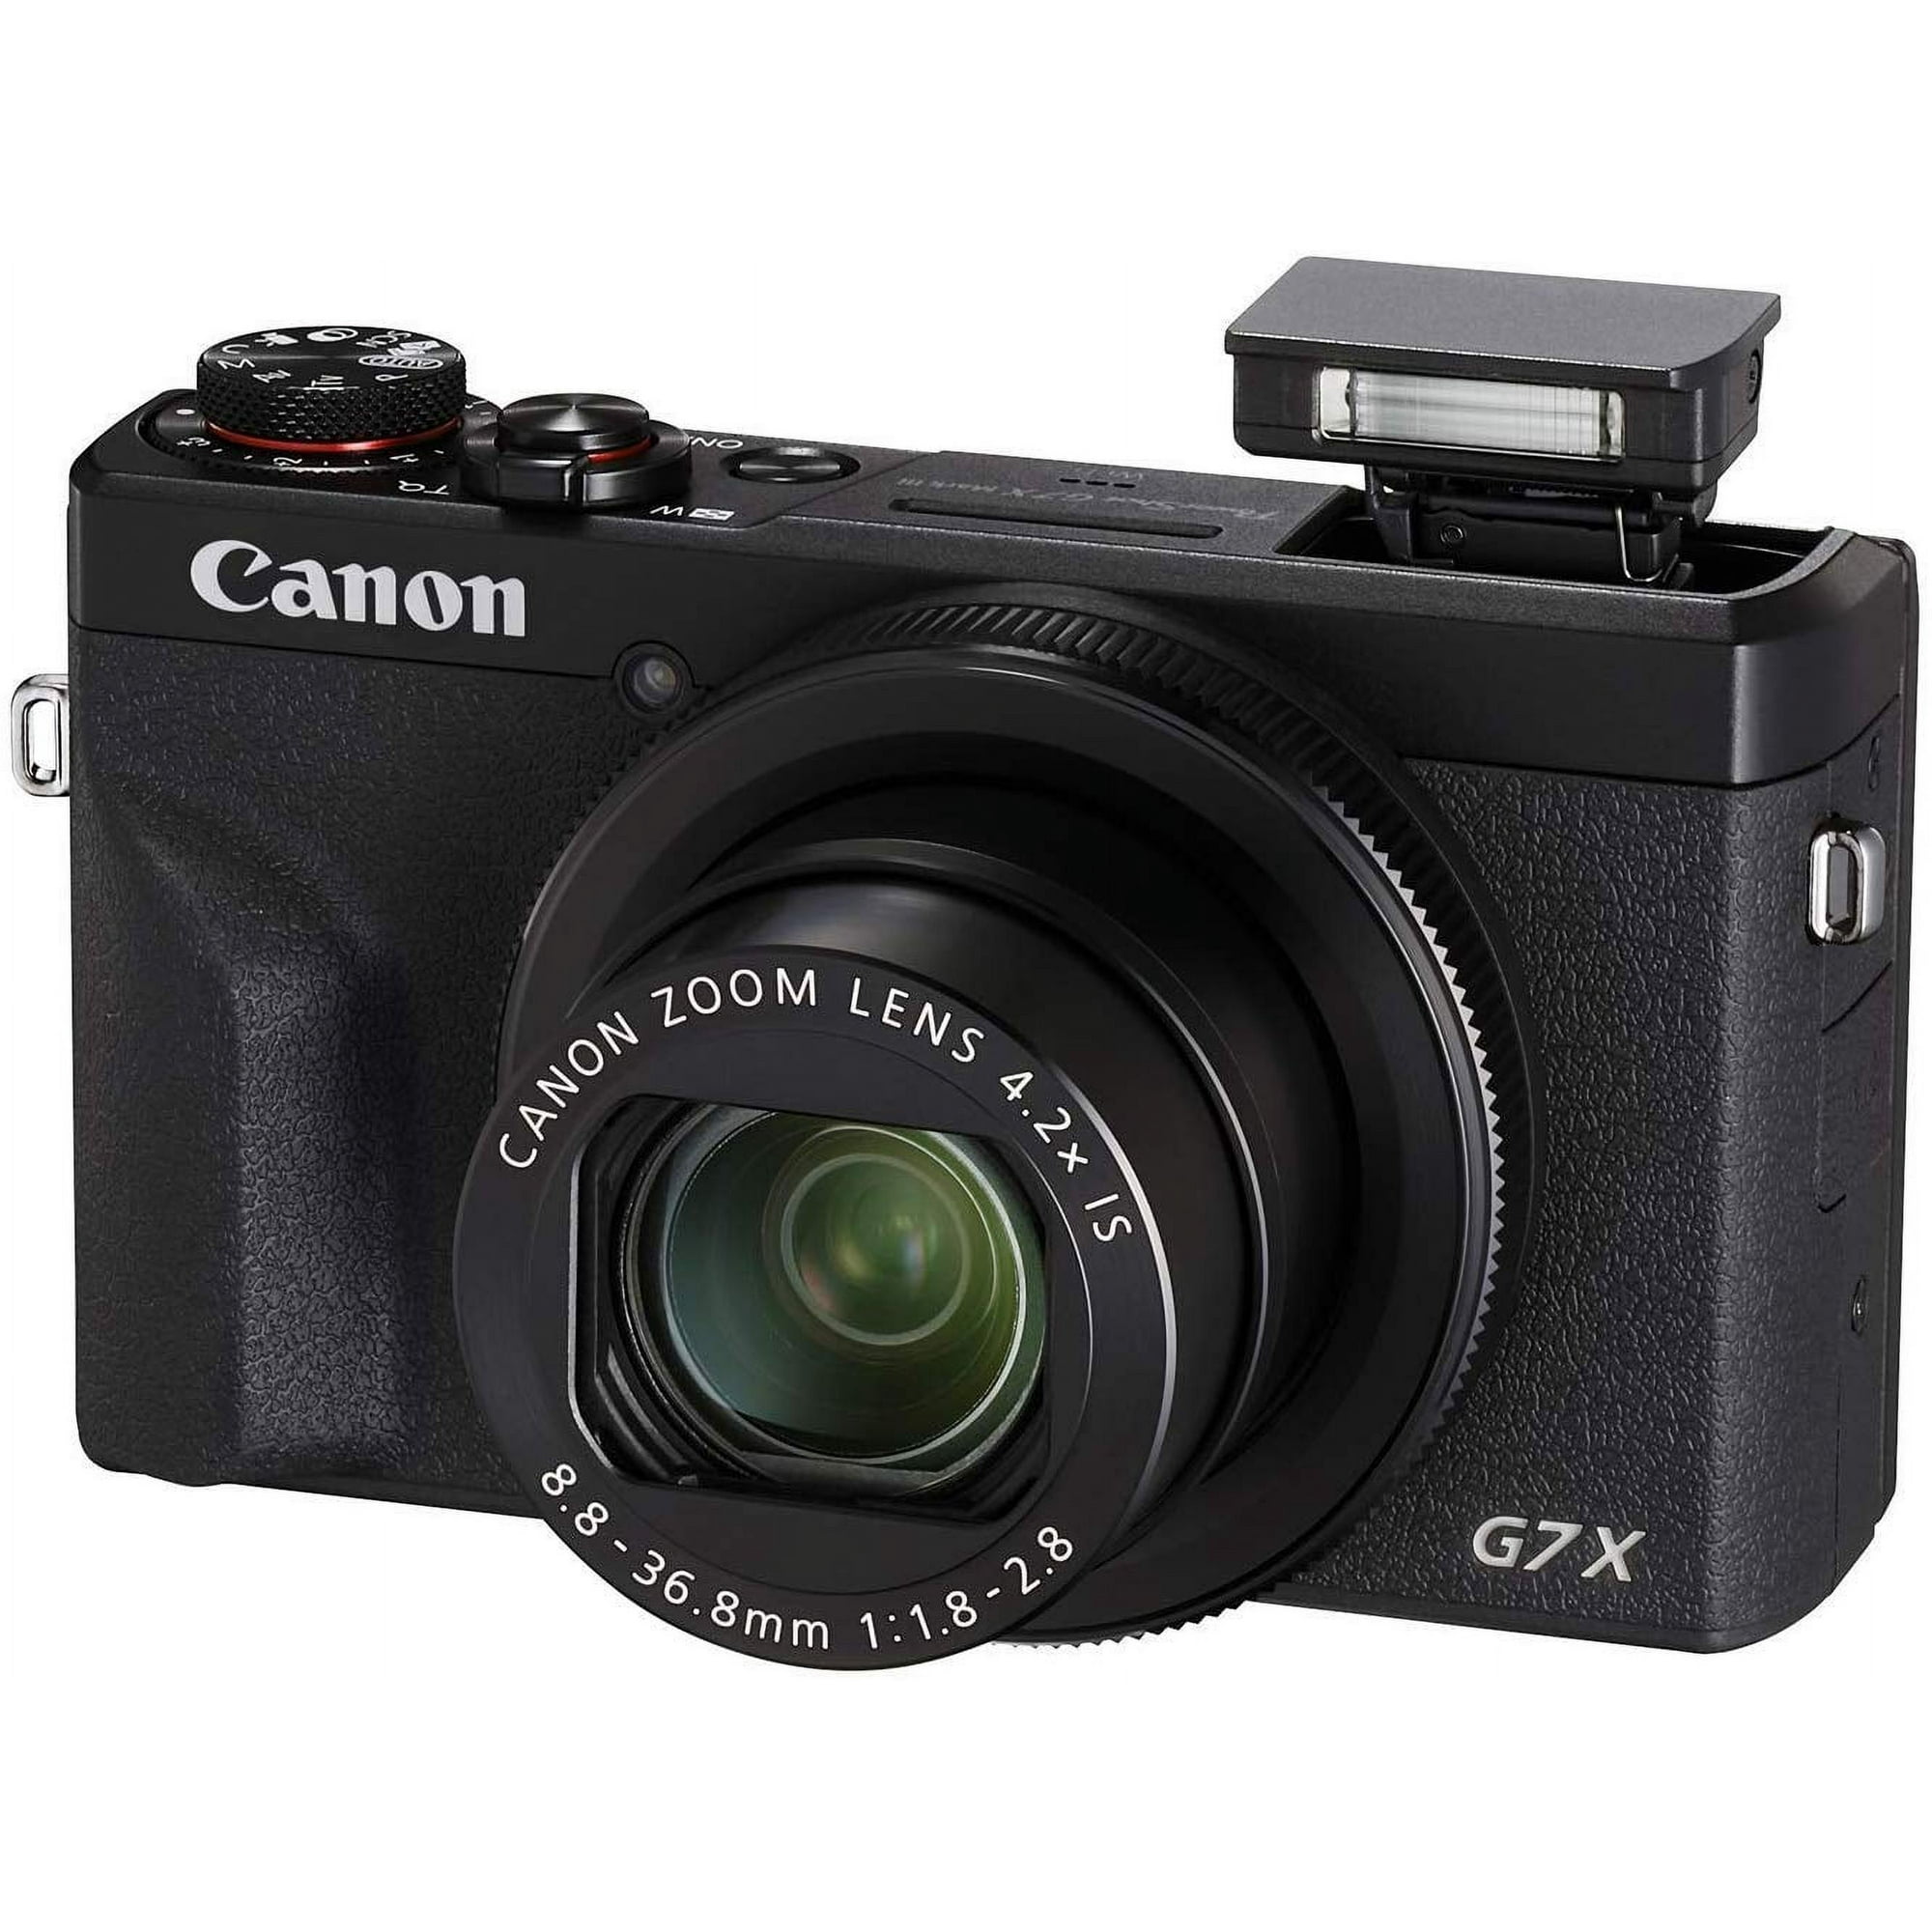 Canon PowerShot G7 X Mark III Digital Camera Black - Walmart.com